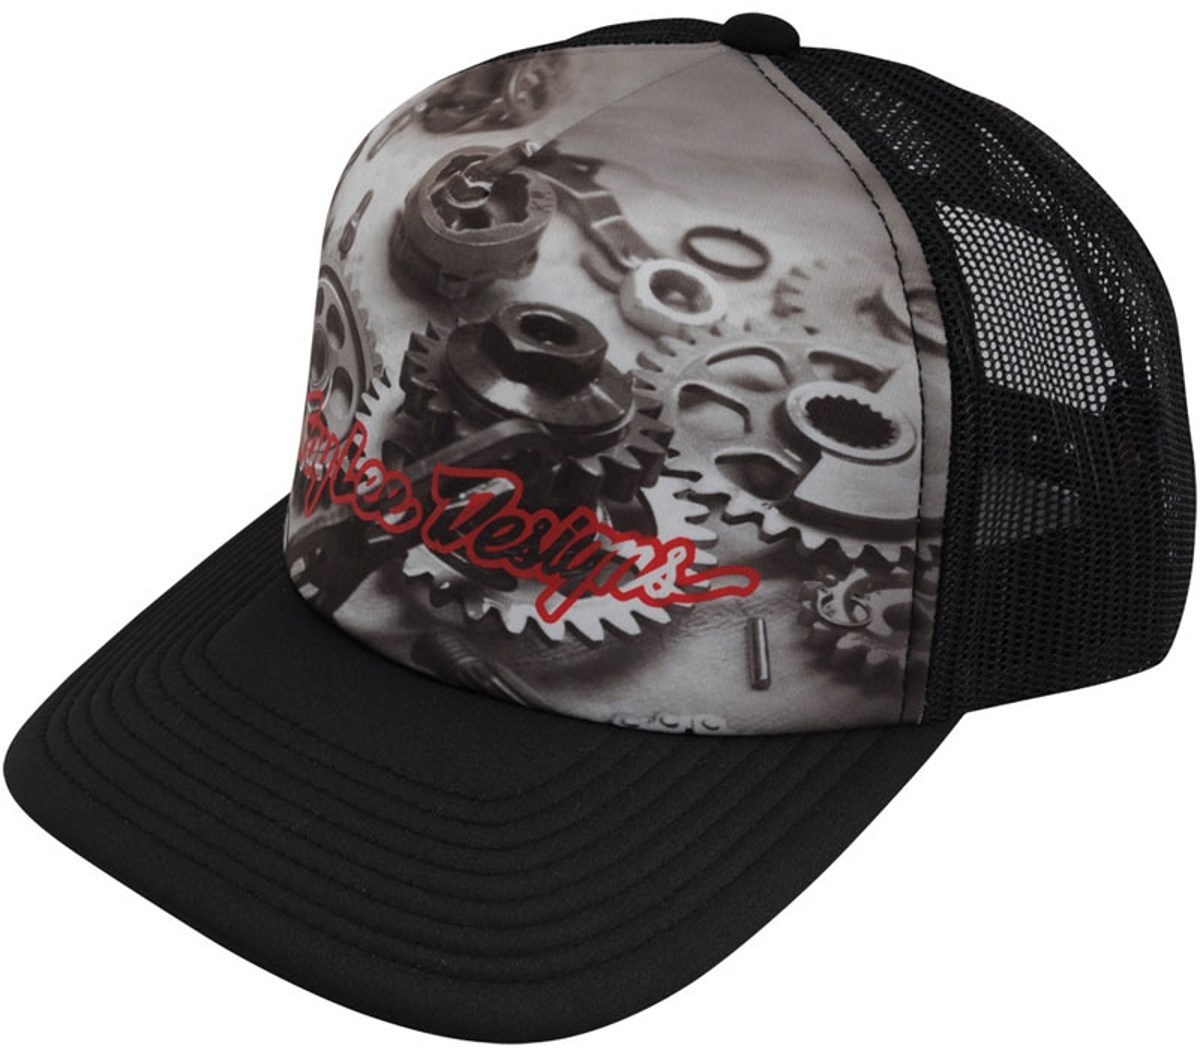 Troy Lee Gear D Up Trucker Hat product image